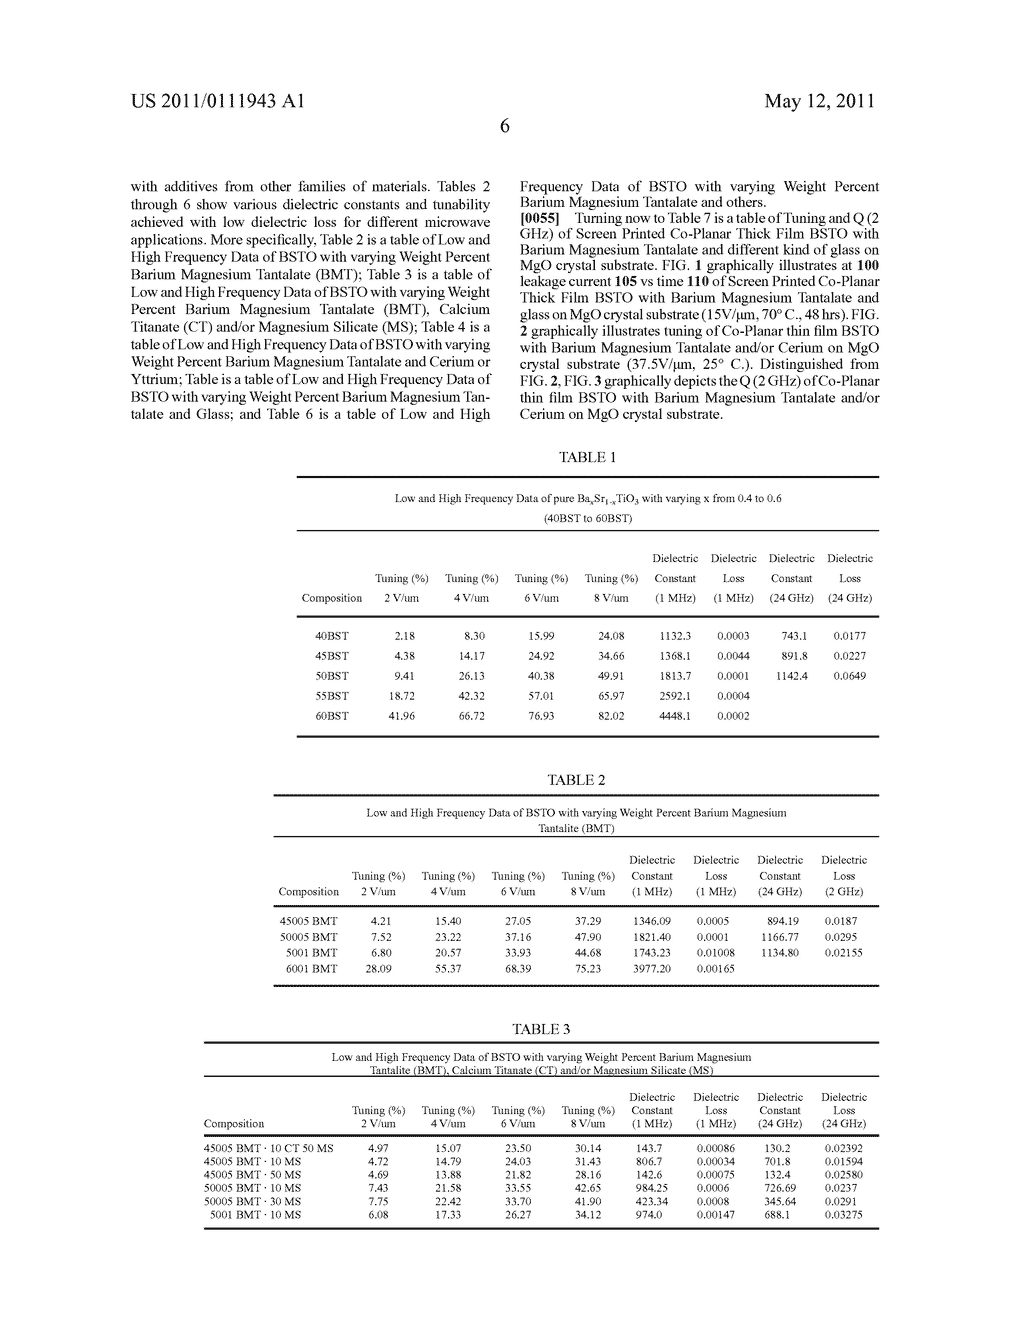 TUNABLE LOW LOSS CERAMIC COMPOSITE COMPOUNDS BASED ON A BARIUM STRONTIUM TITANATE/BARIUM MAGNESIUM TANTALATE/NIOBATE - diagram, schematic, and image 13